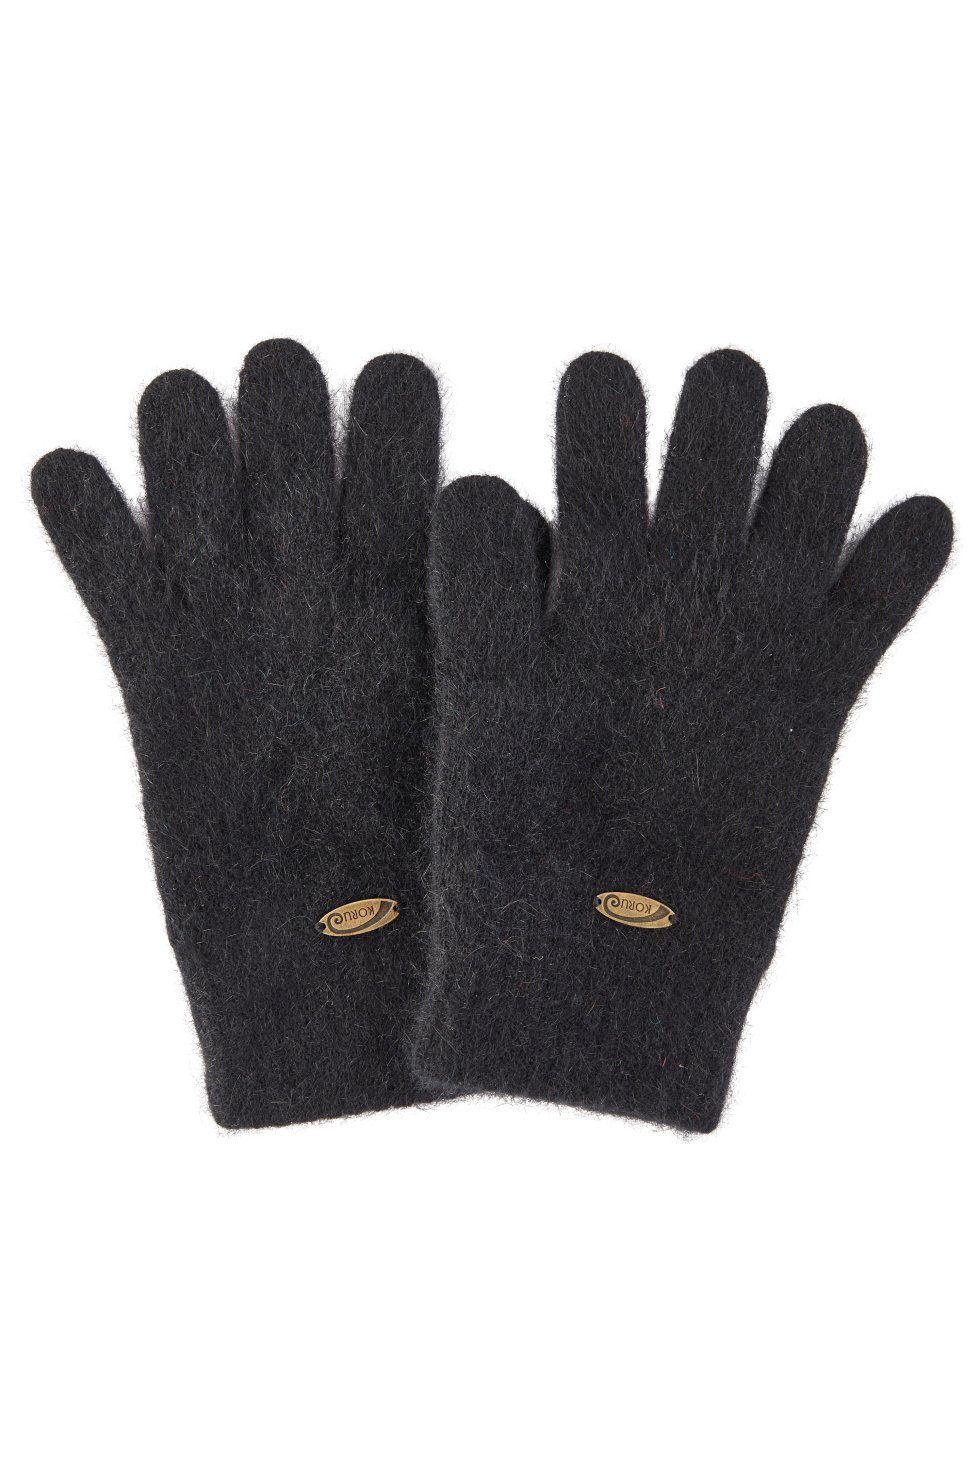 Koru Knitwear Strickhandschuhe Handschuhe aus der Possumhaarfaser schwarz